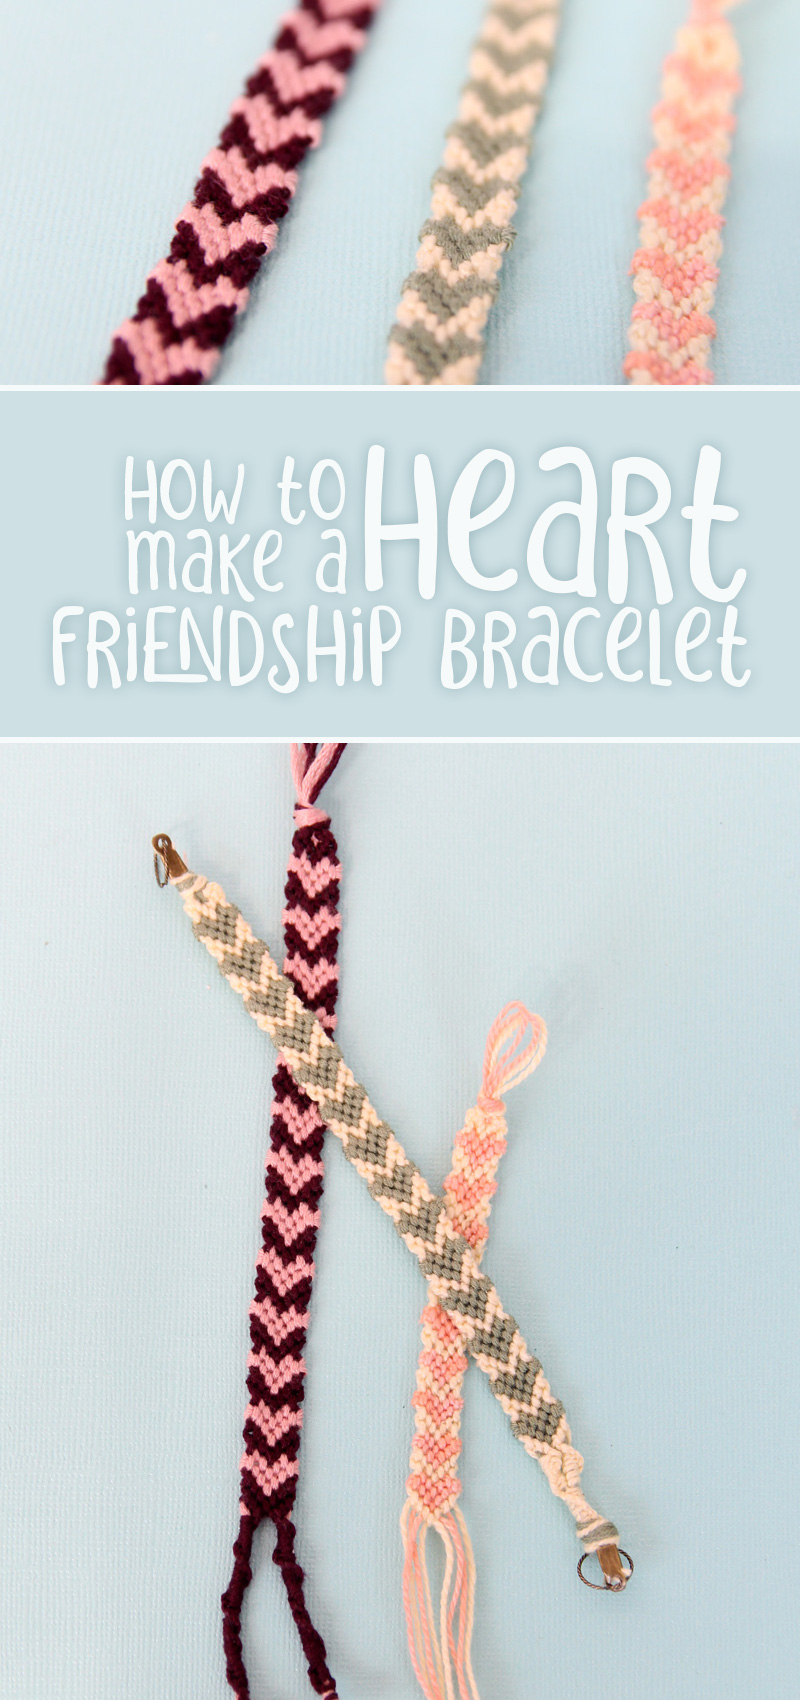 heart friendship bracelet tutorial!! (valentine's day bracelet) - YouTube